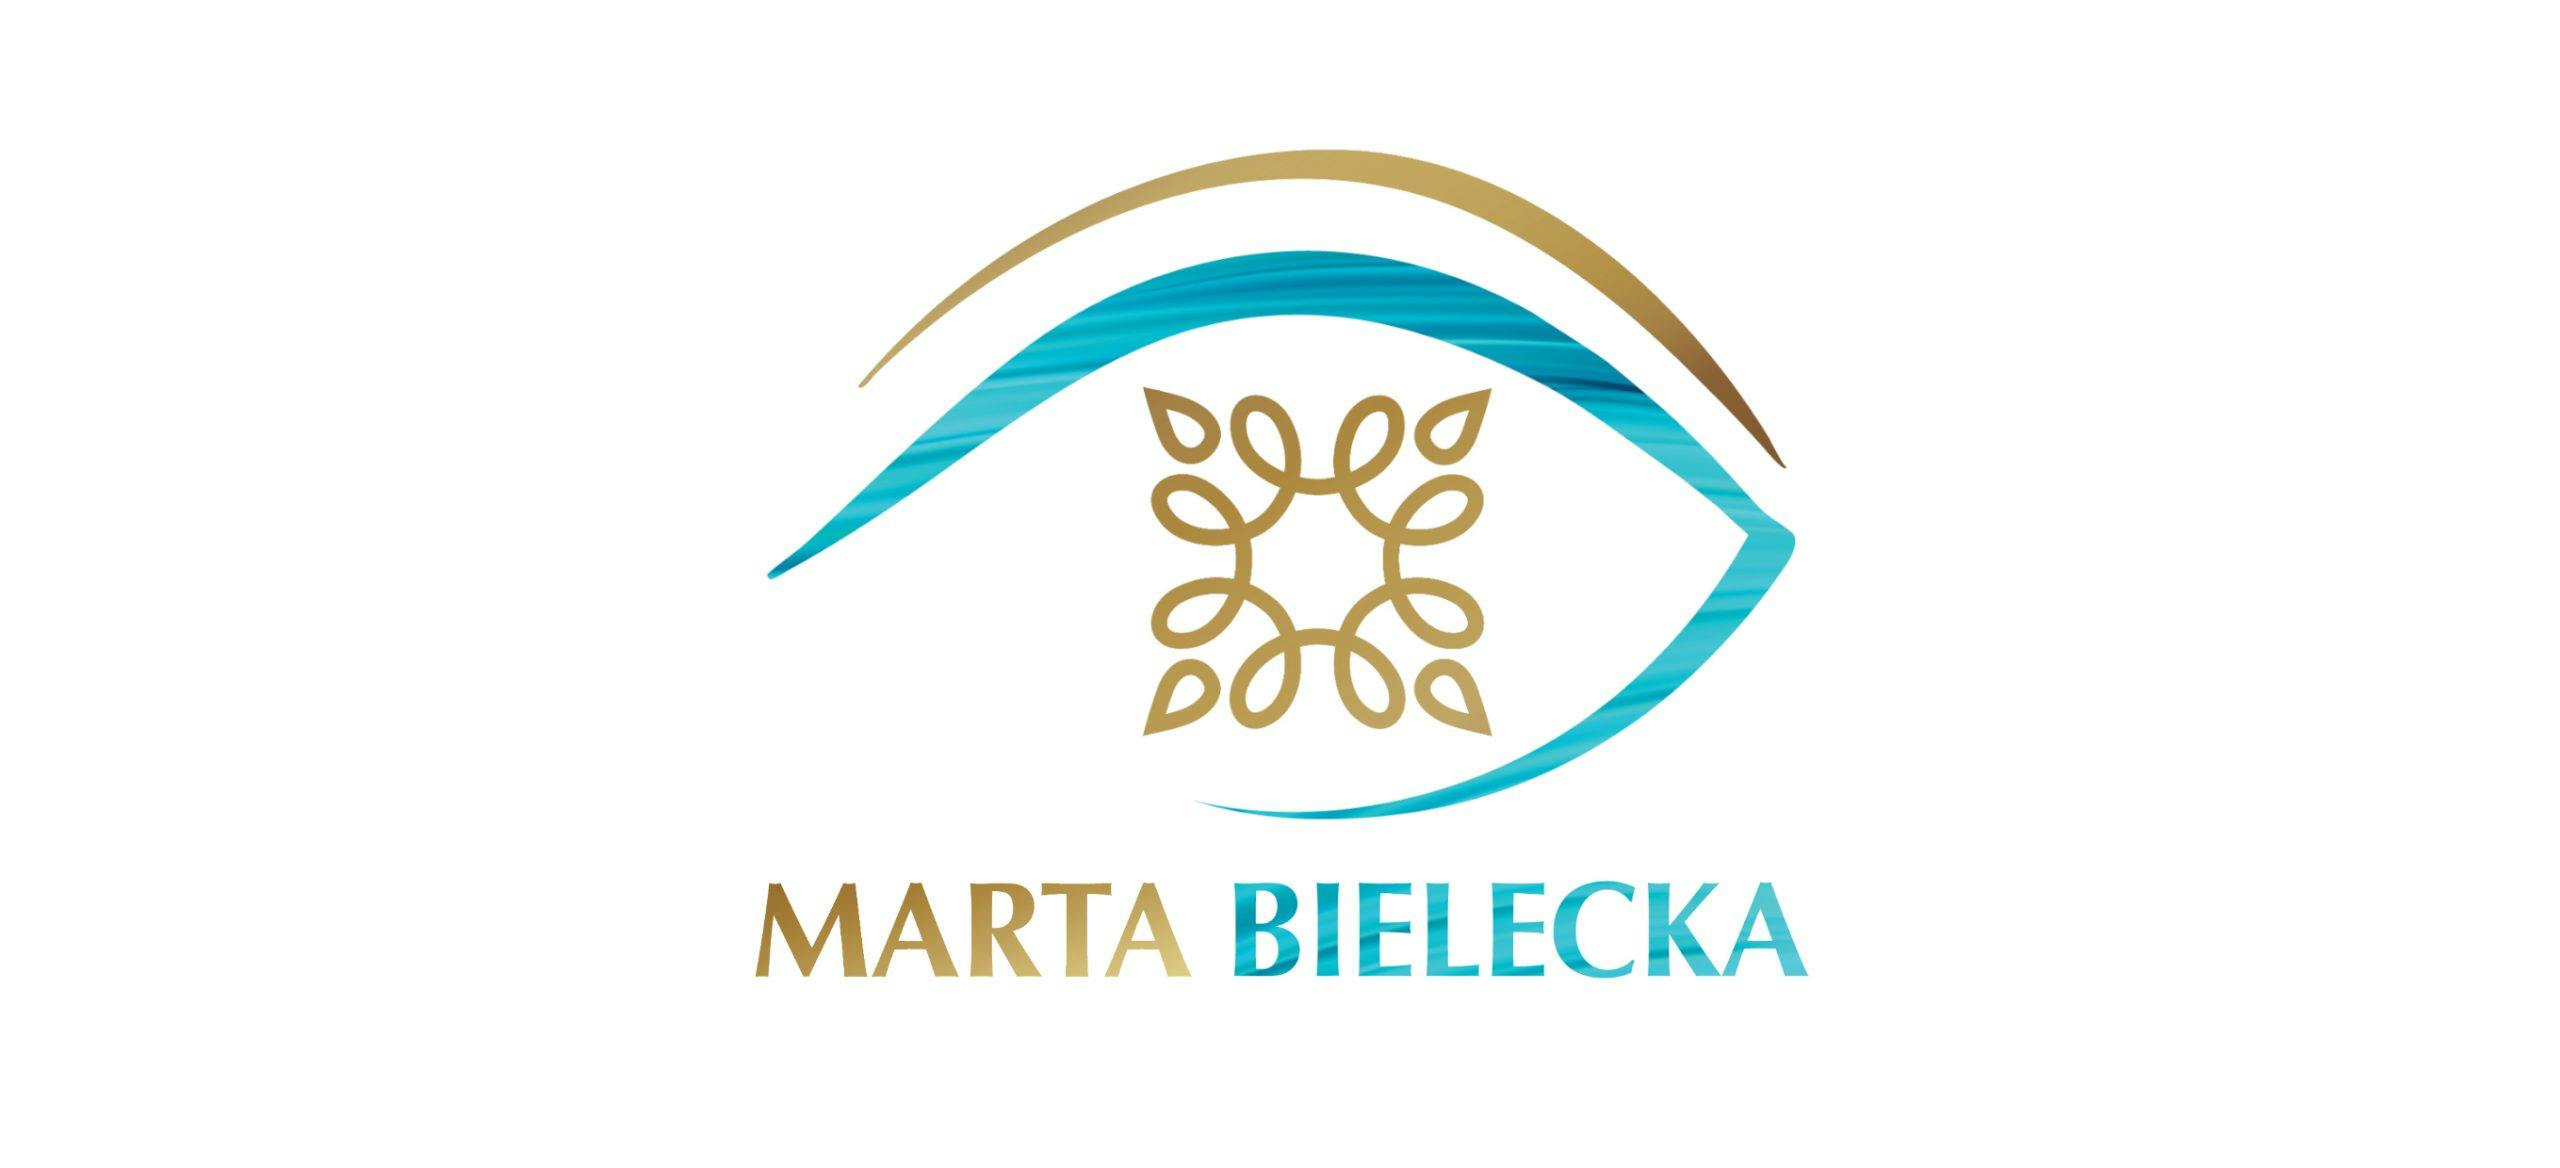 Marta Bielecka Site Project